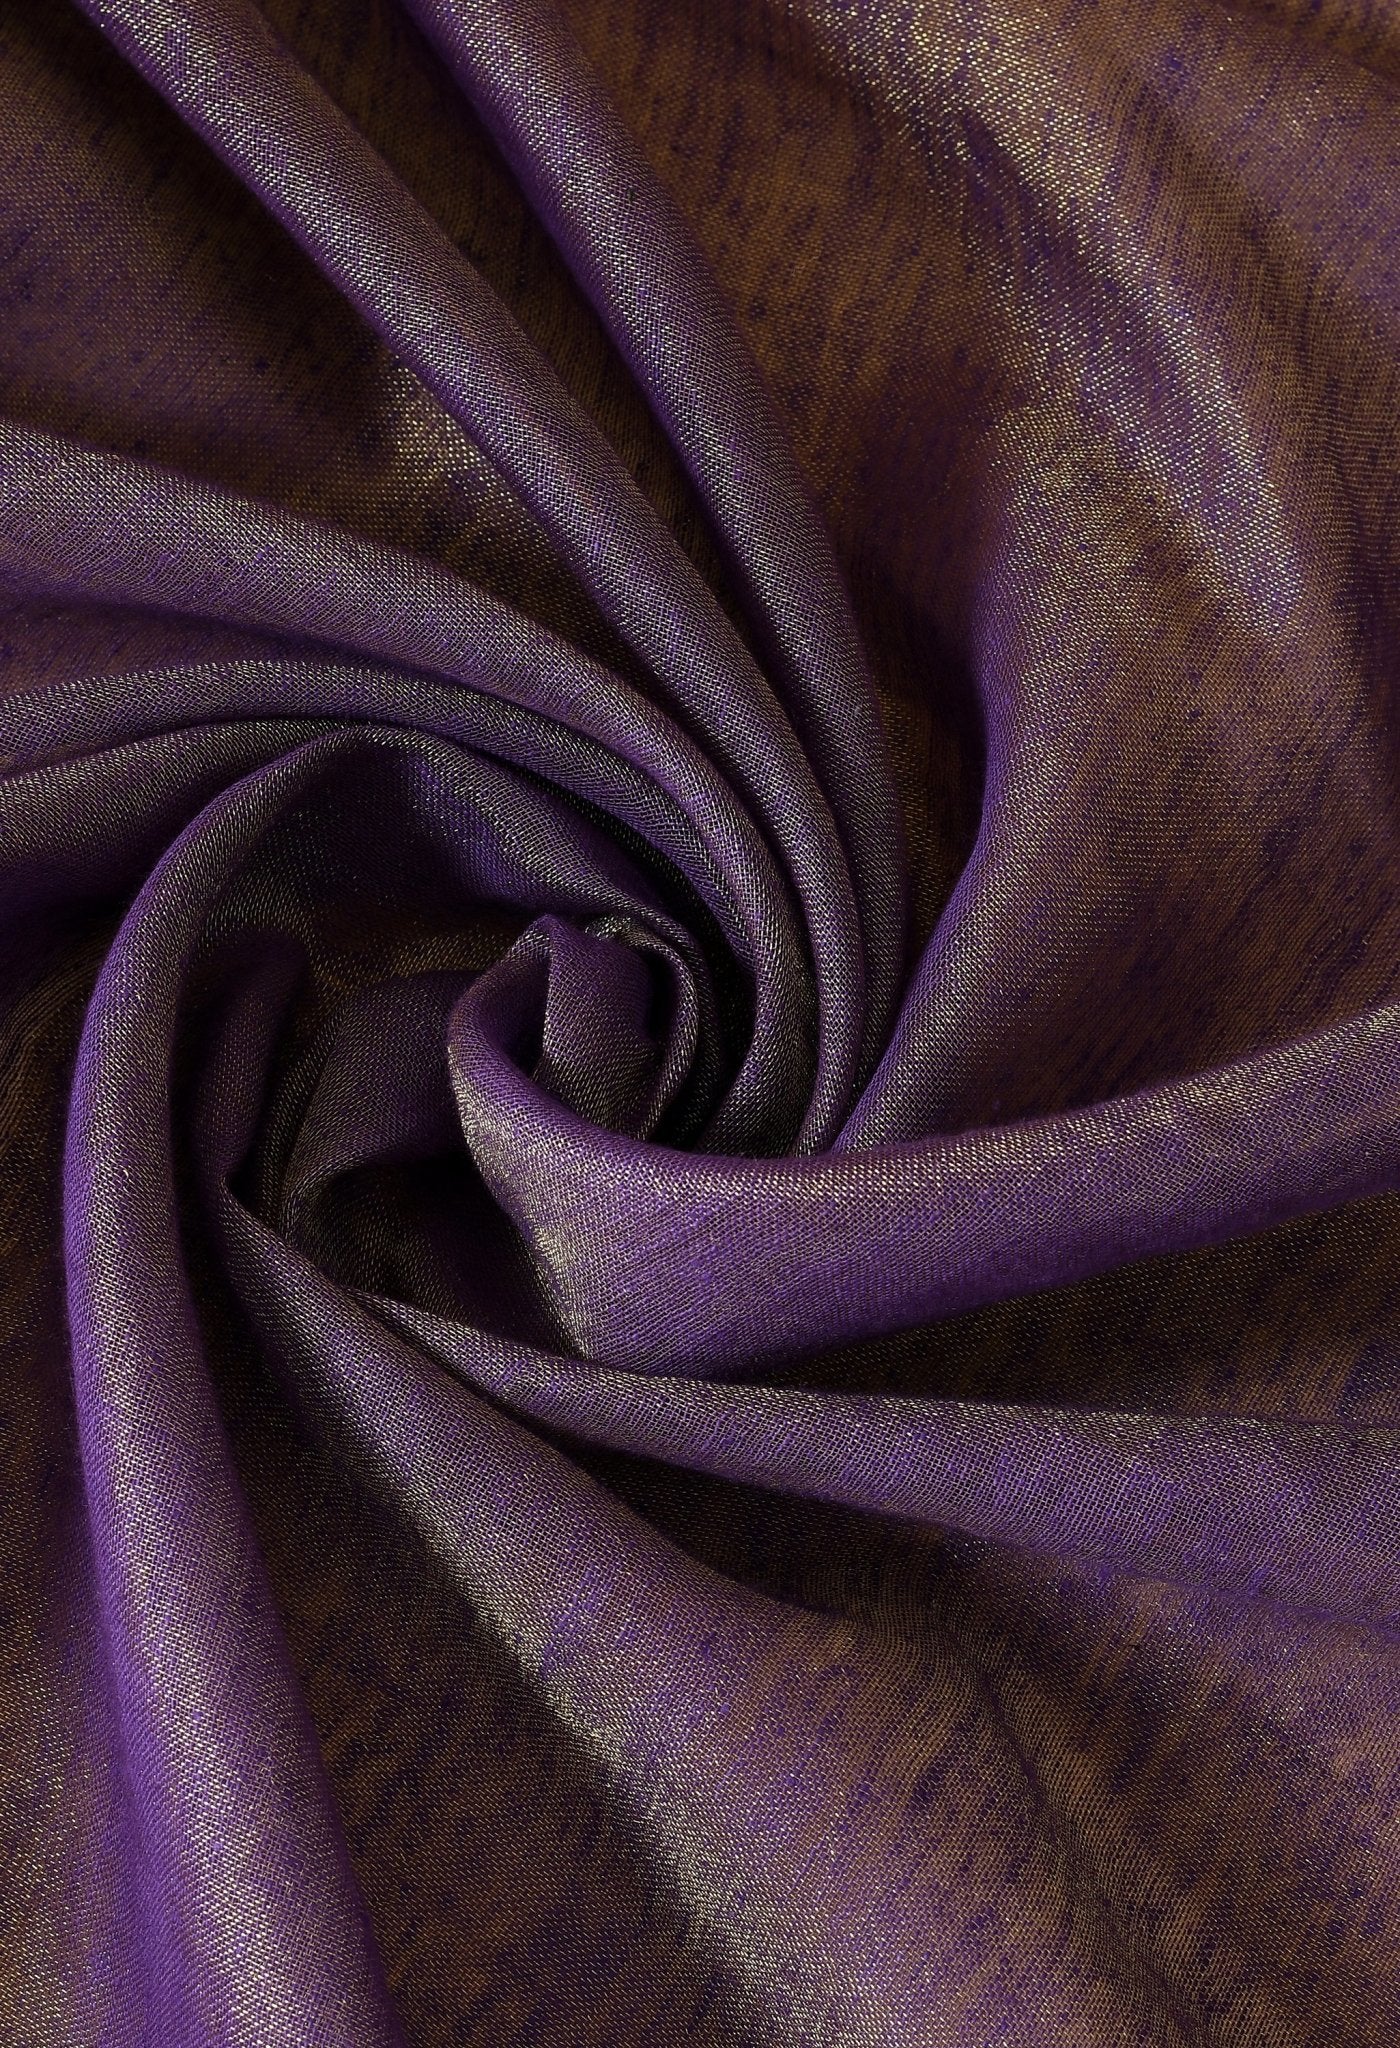 Purple Tissue linen Saree With Golden Zari Border - Swapna Creation